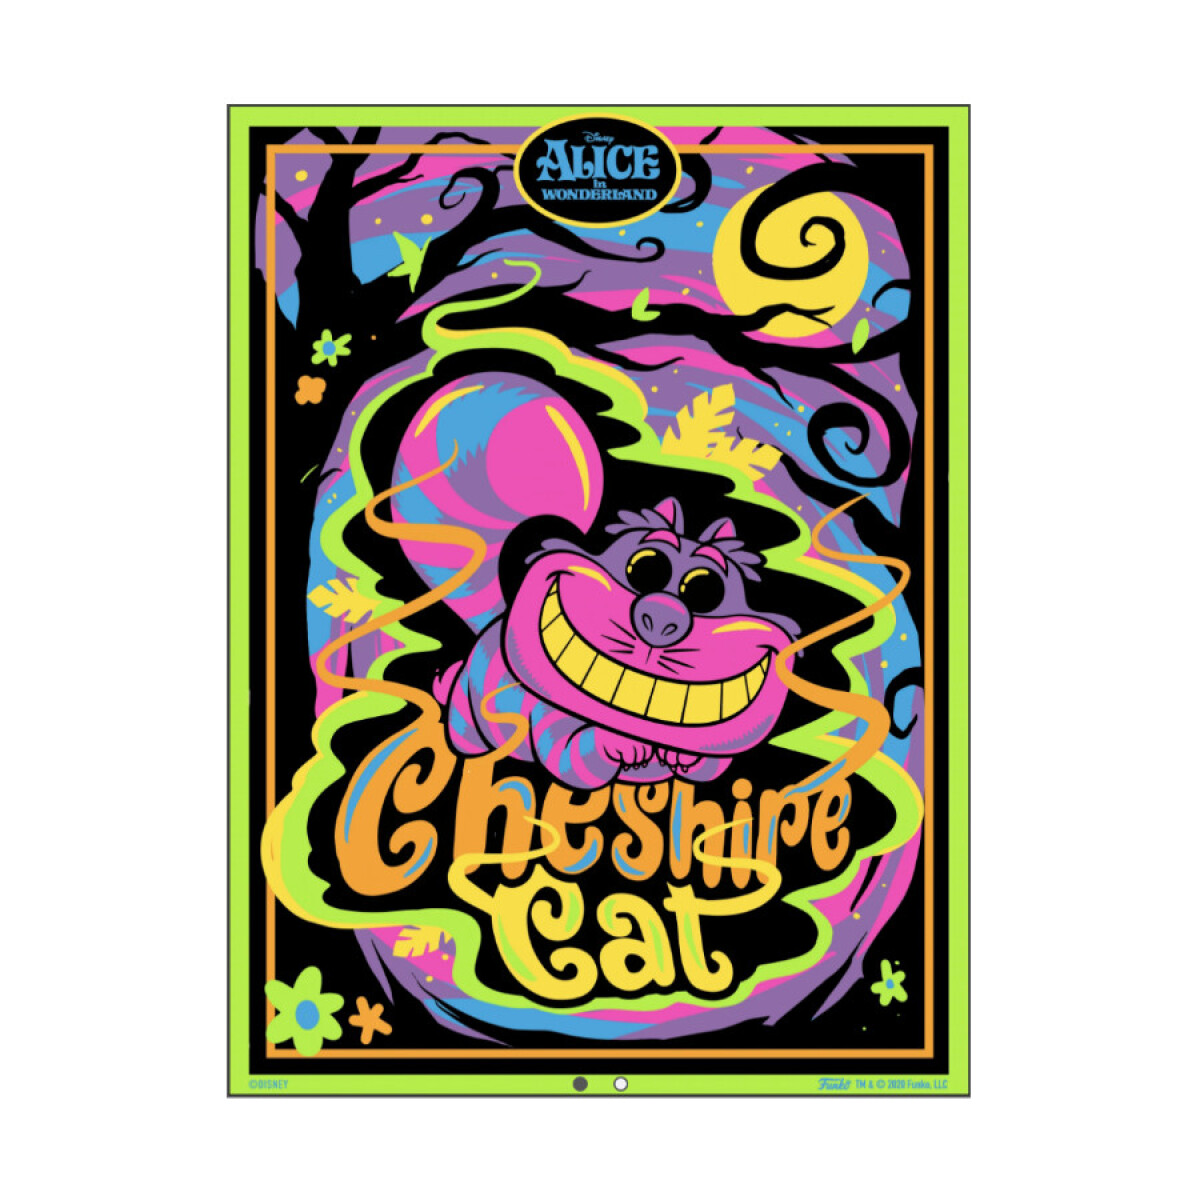 Cheshire Cat poster Funko glows in the dark - Alice in Wonderland 